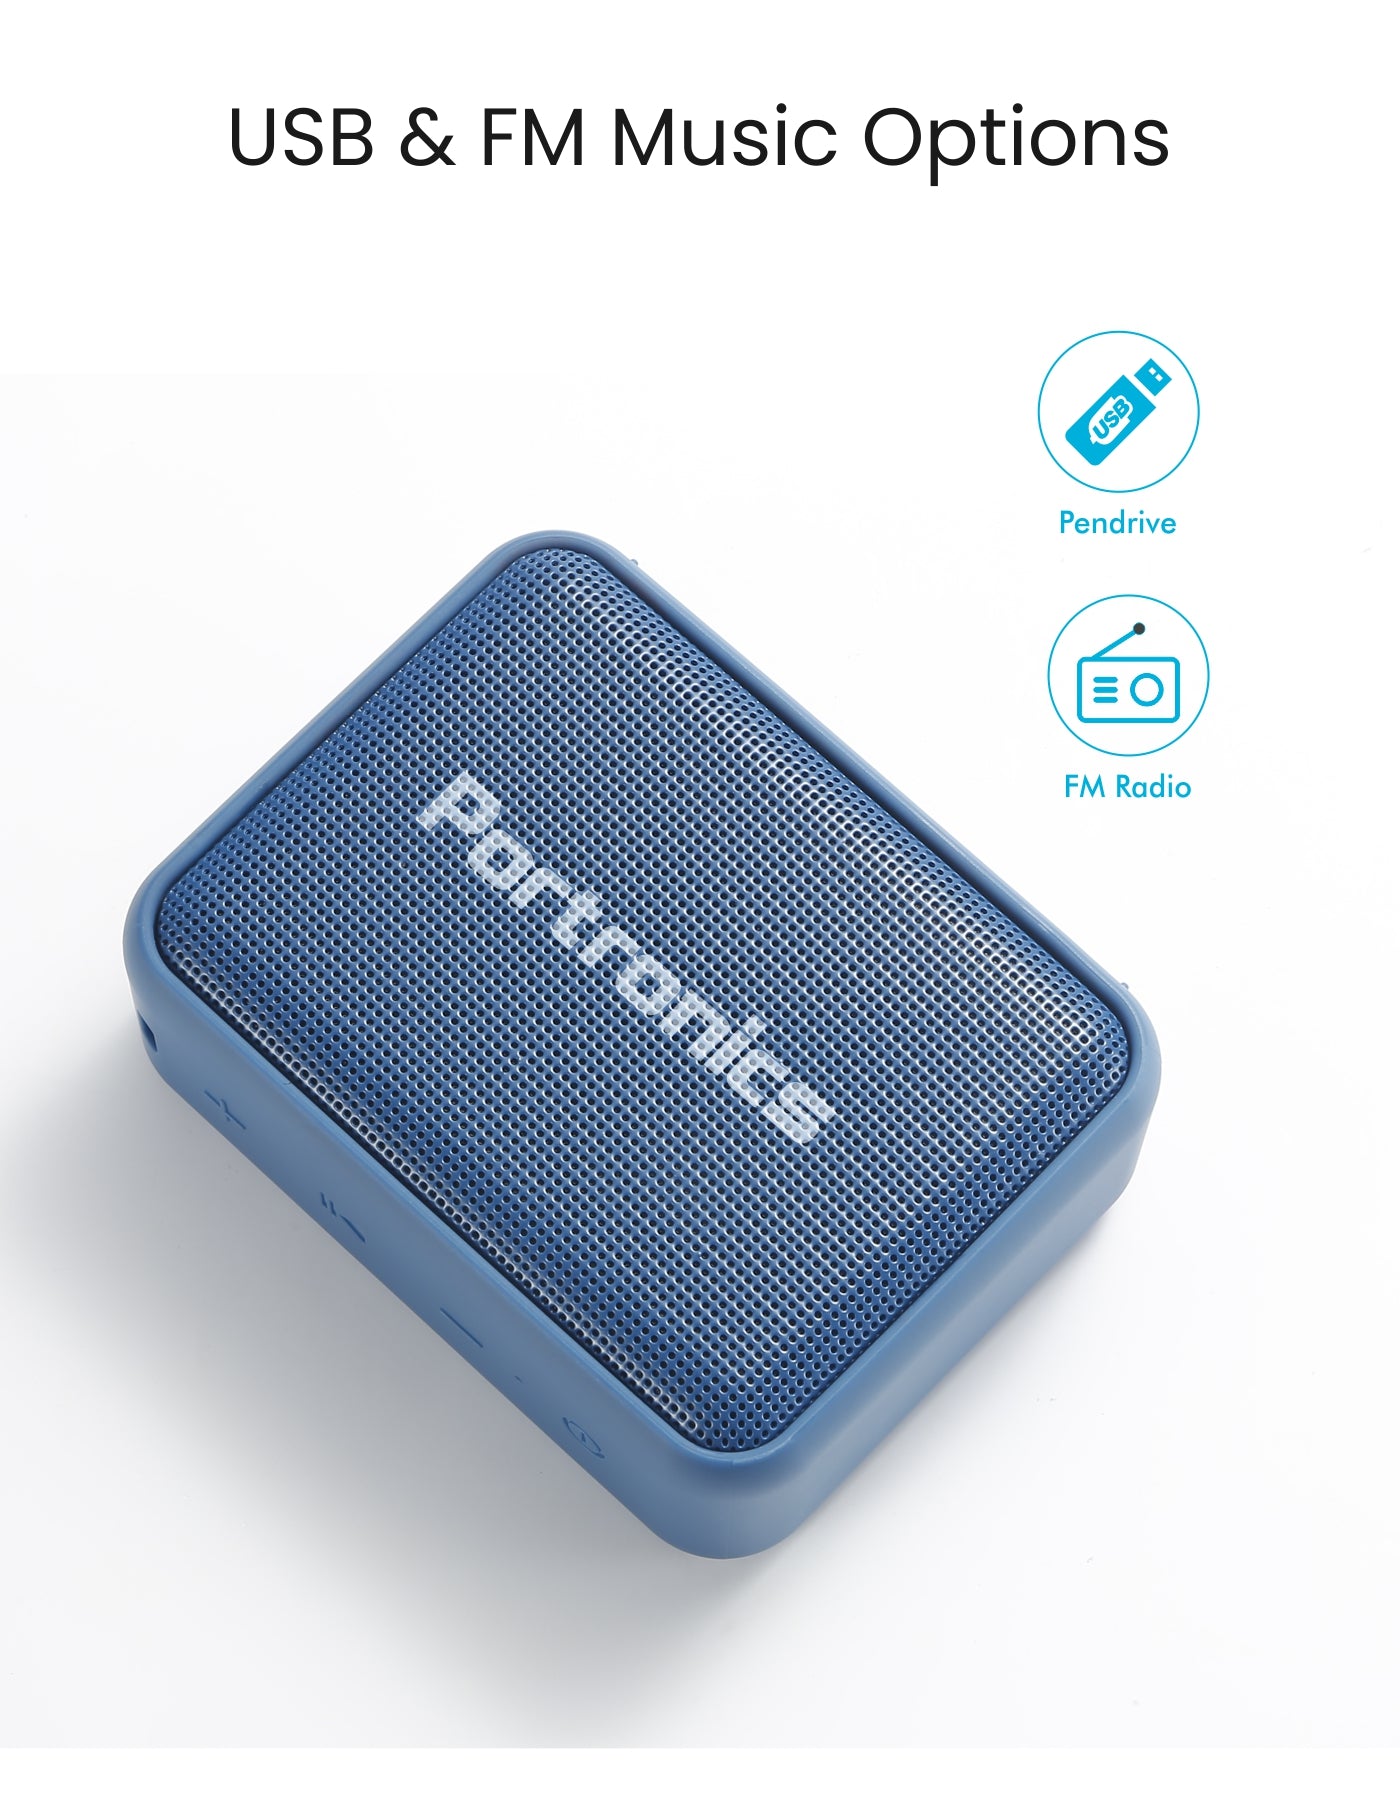 Pendrive, USB , FM avaliable in portronics dynamo bluetooth speaker portable